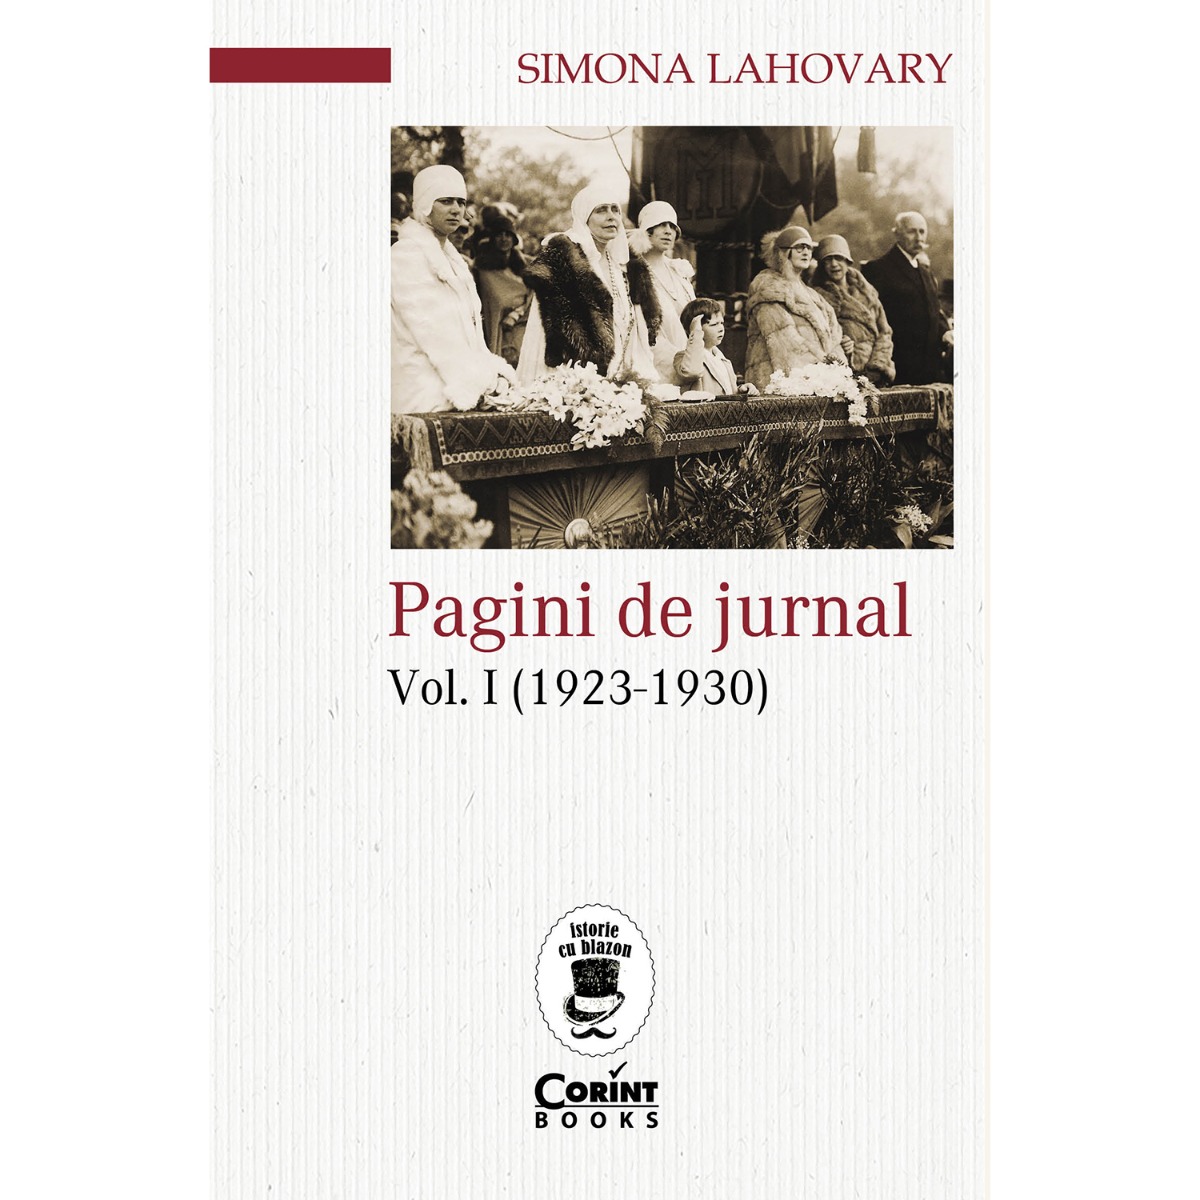 Pagini de jurnal Simona Lahovary 1923 - 1930 Vol.